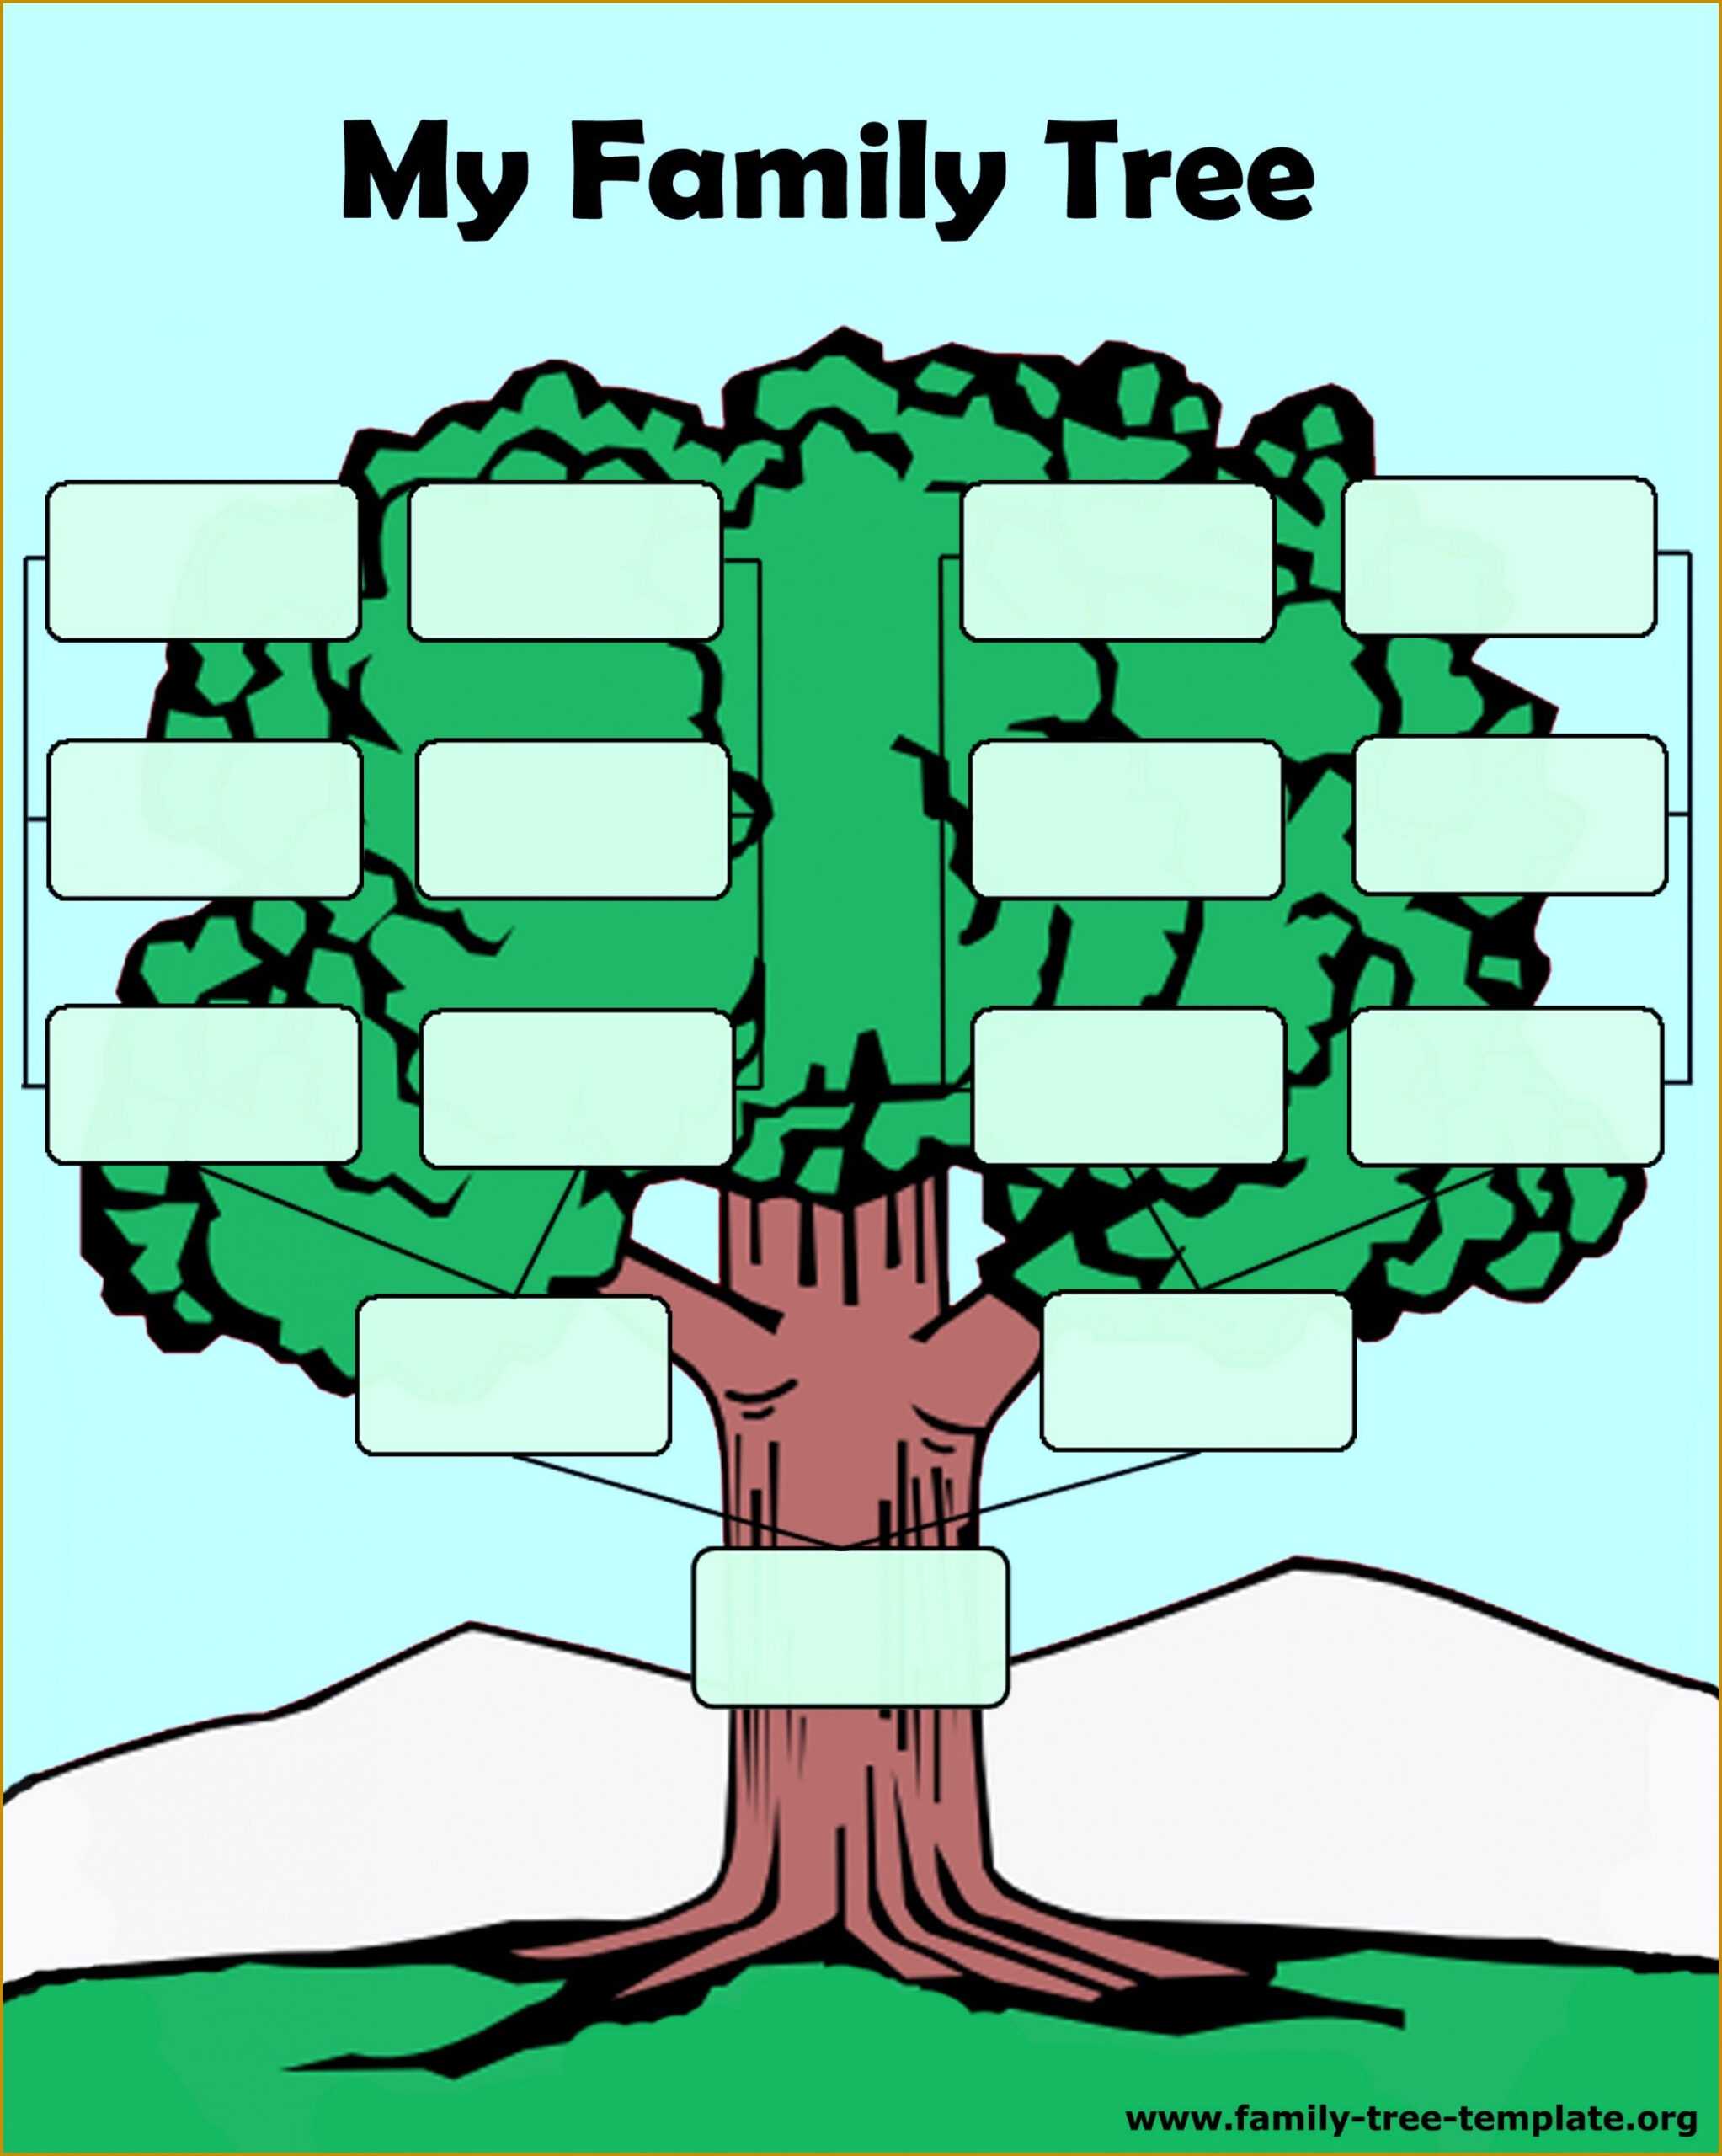 031 Simple Family Tree Template Breathtaking Ideas With In Blank Family Tree Template 3 Generations